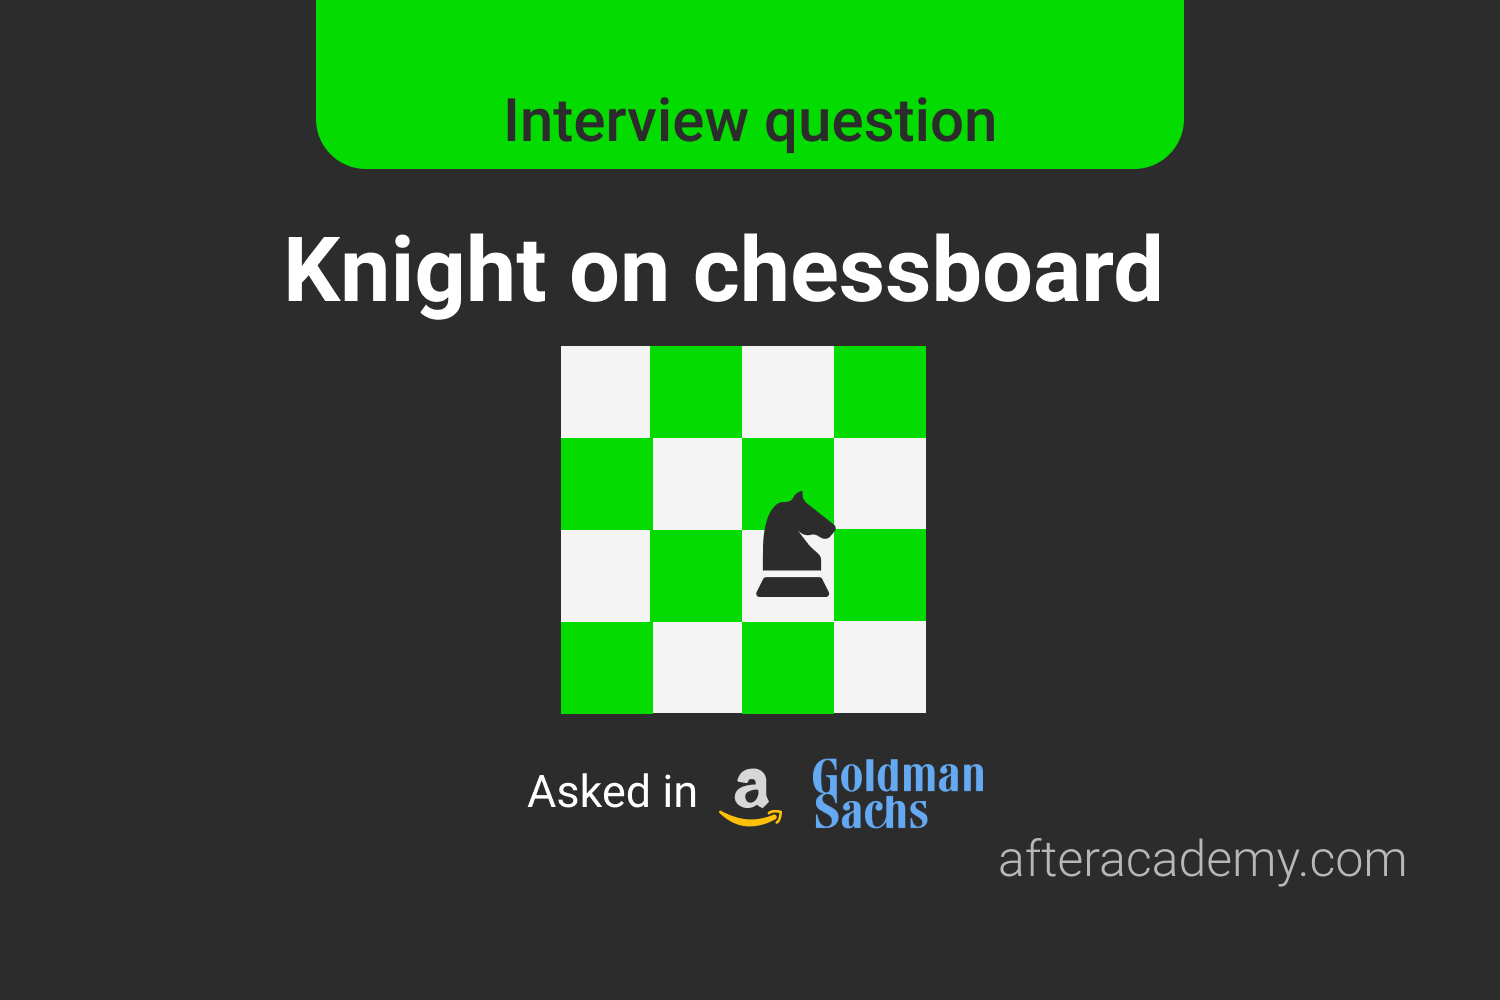 Knight on chessboard